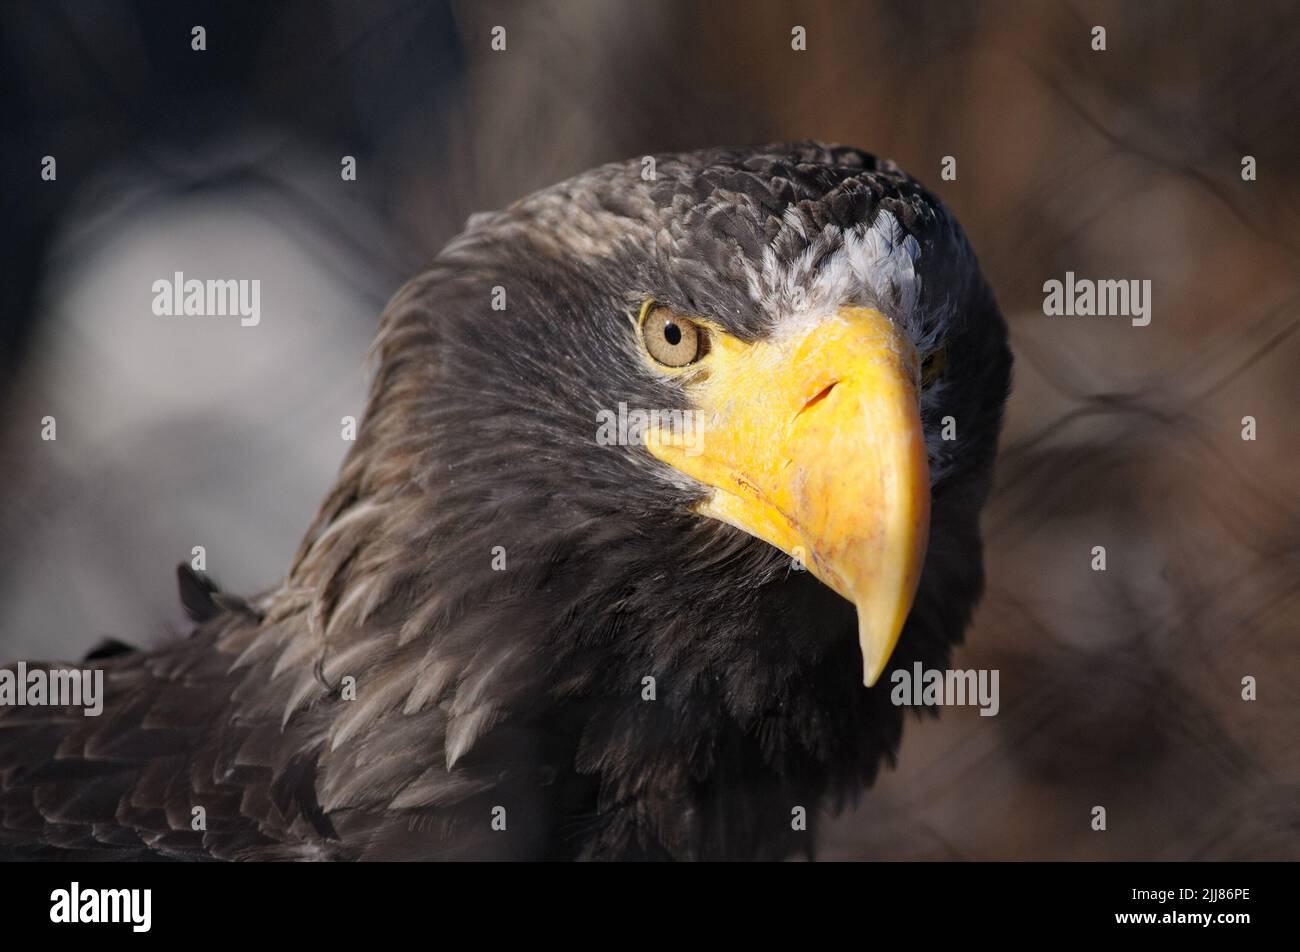 Wild eagle portrait closeup looks in camera Stock Photo